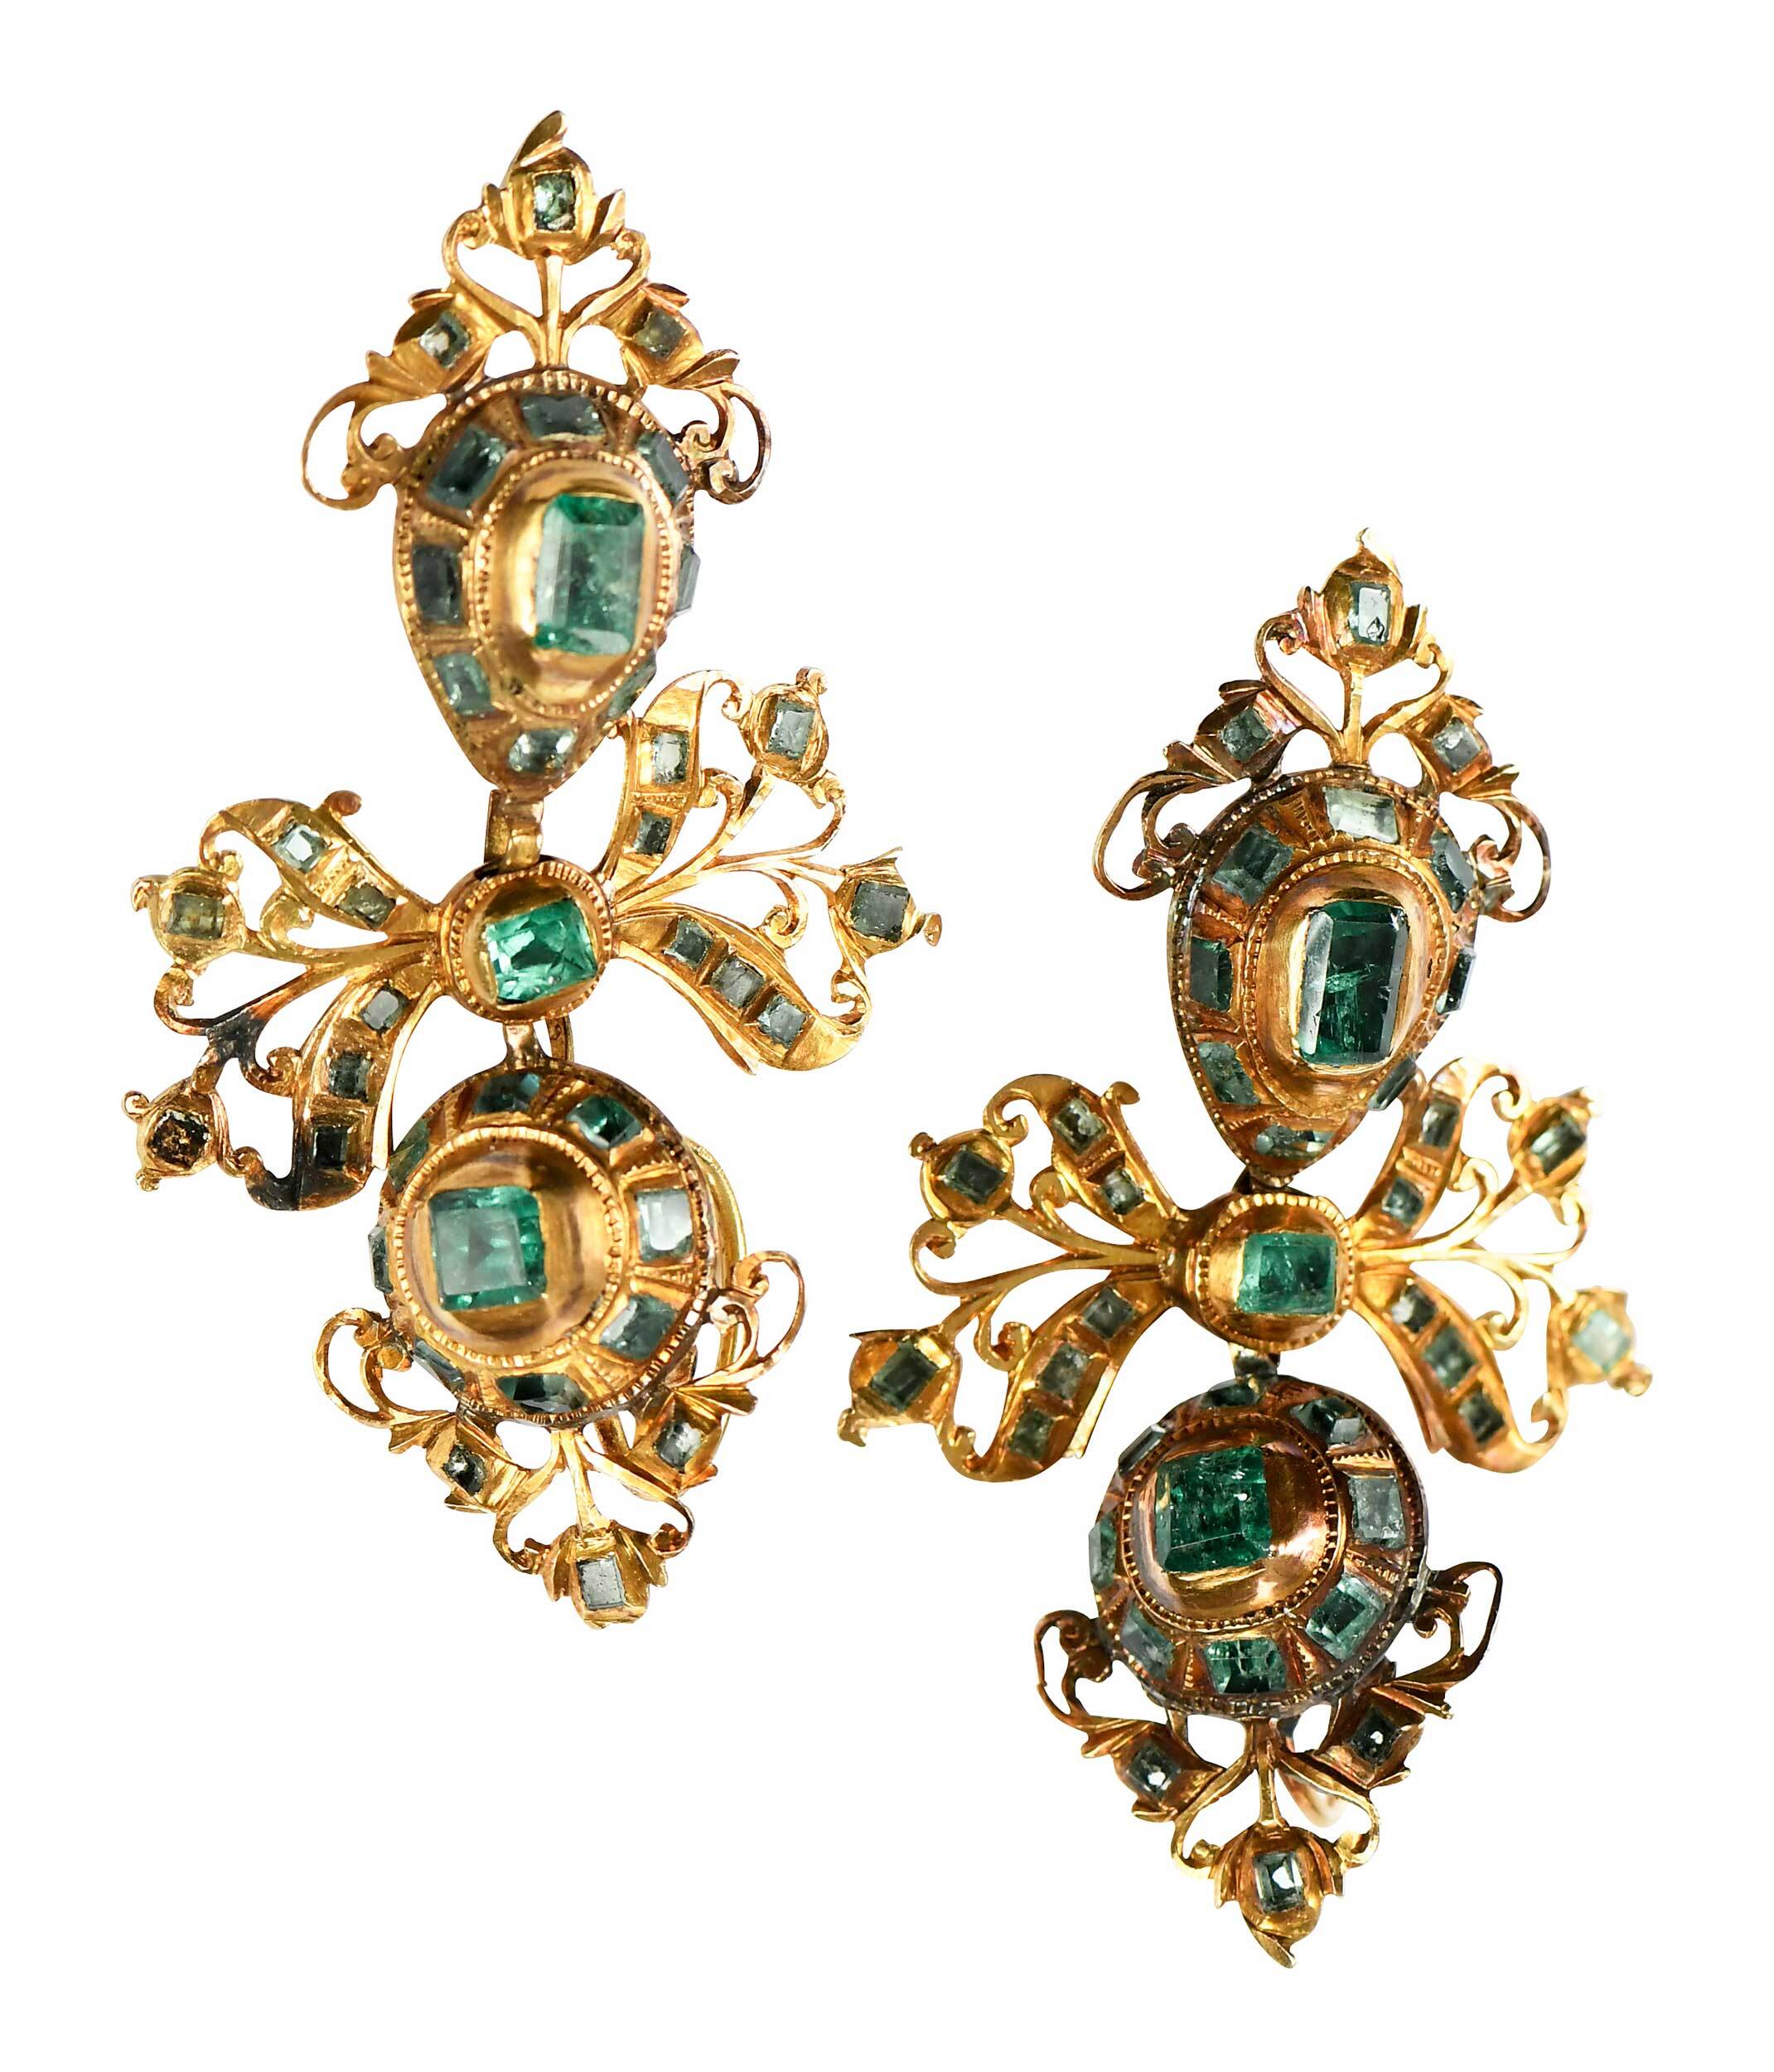 Georgian Gold and Emerald Earrings, Lot 571, Estimate: $1,200-$1,800